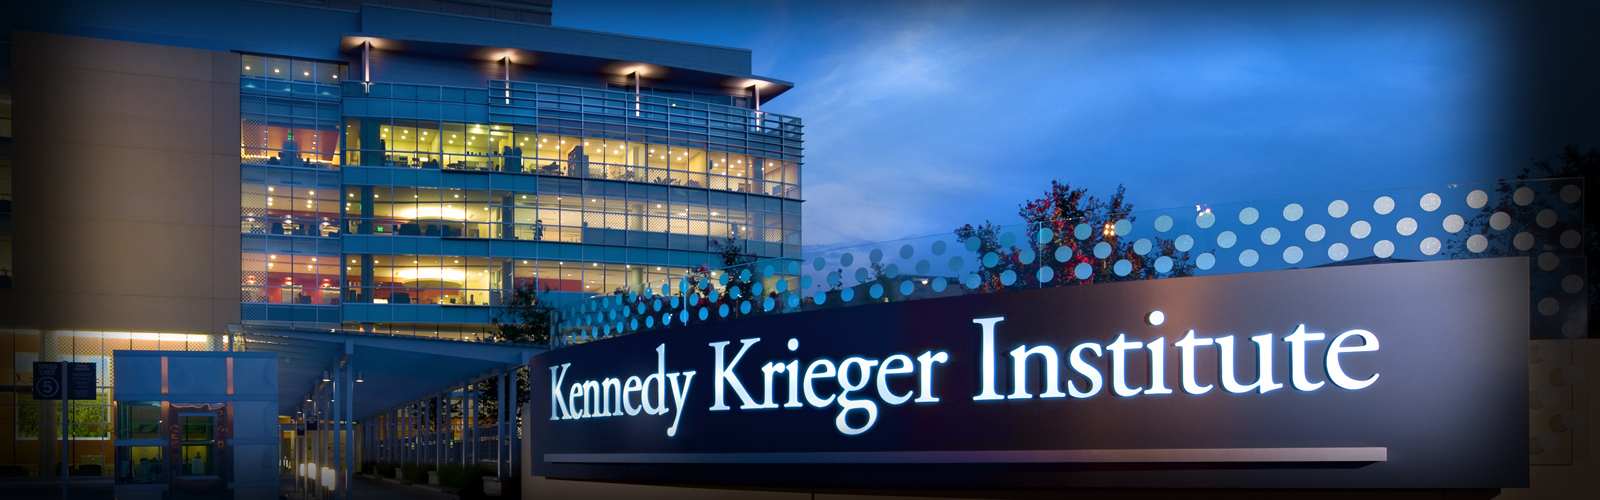 Kennedy Krieger Institute sign.